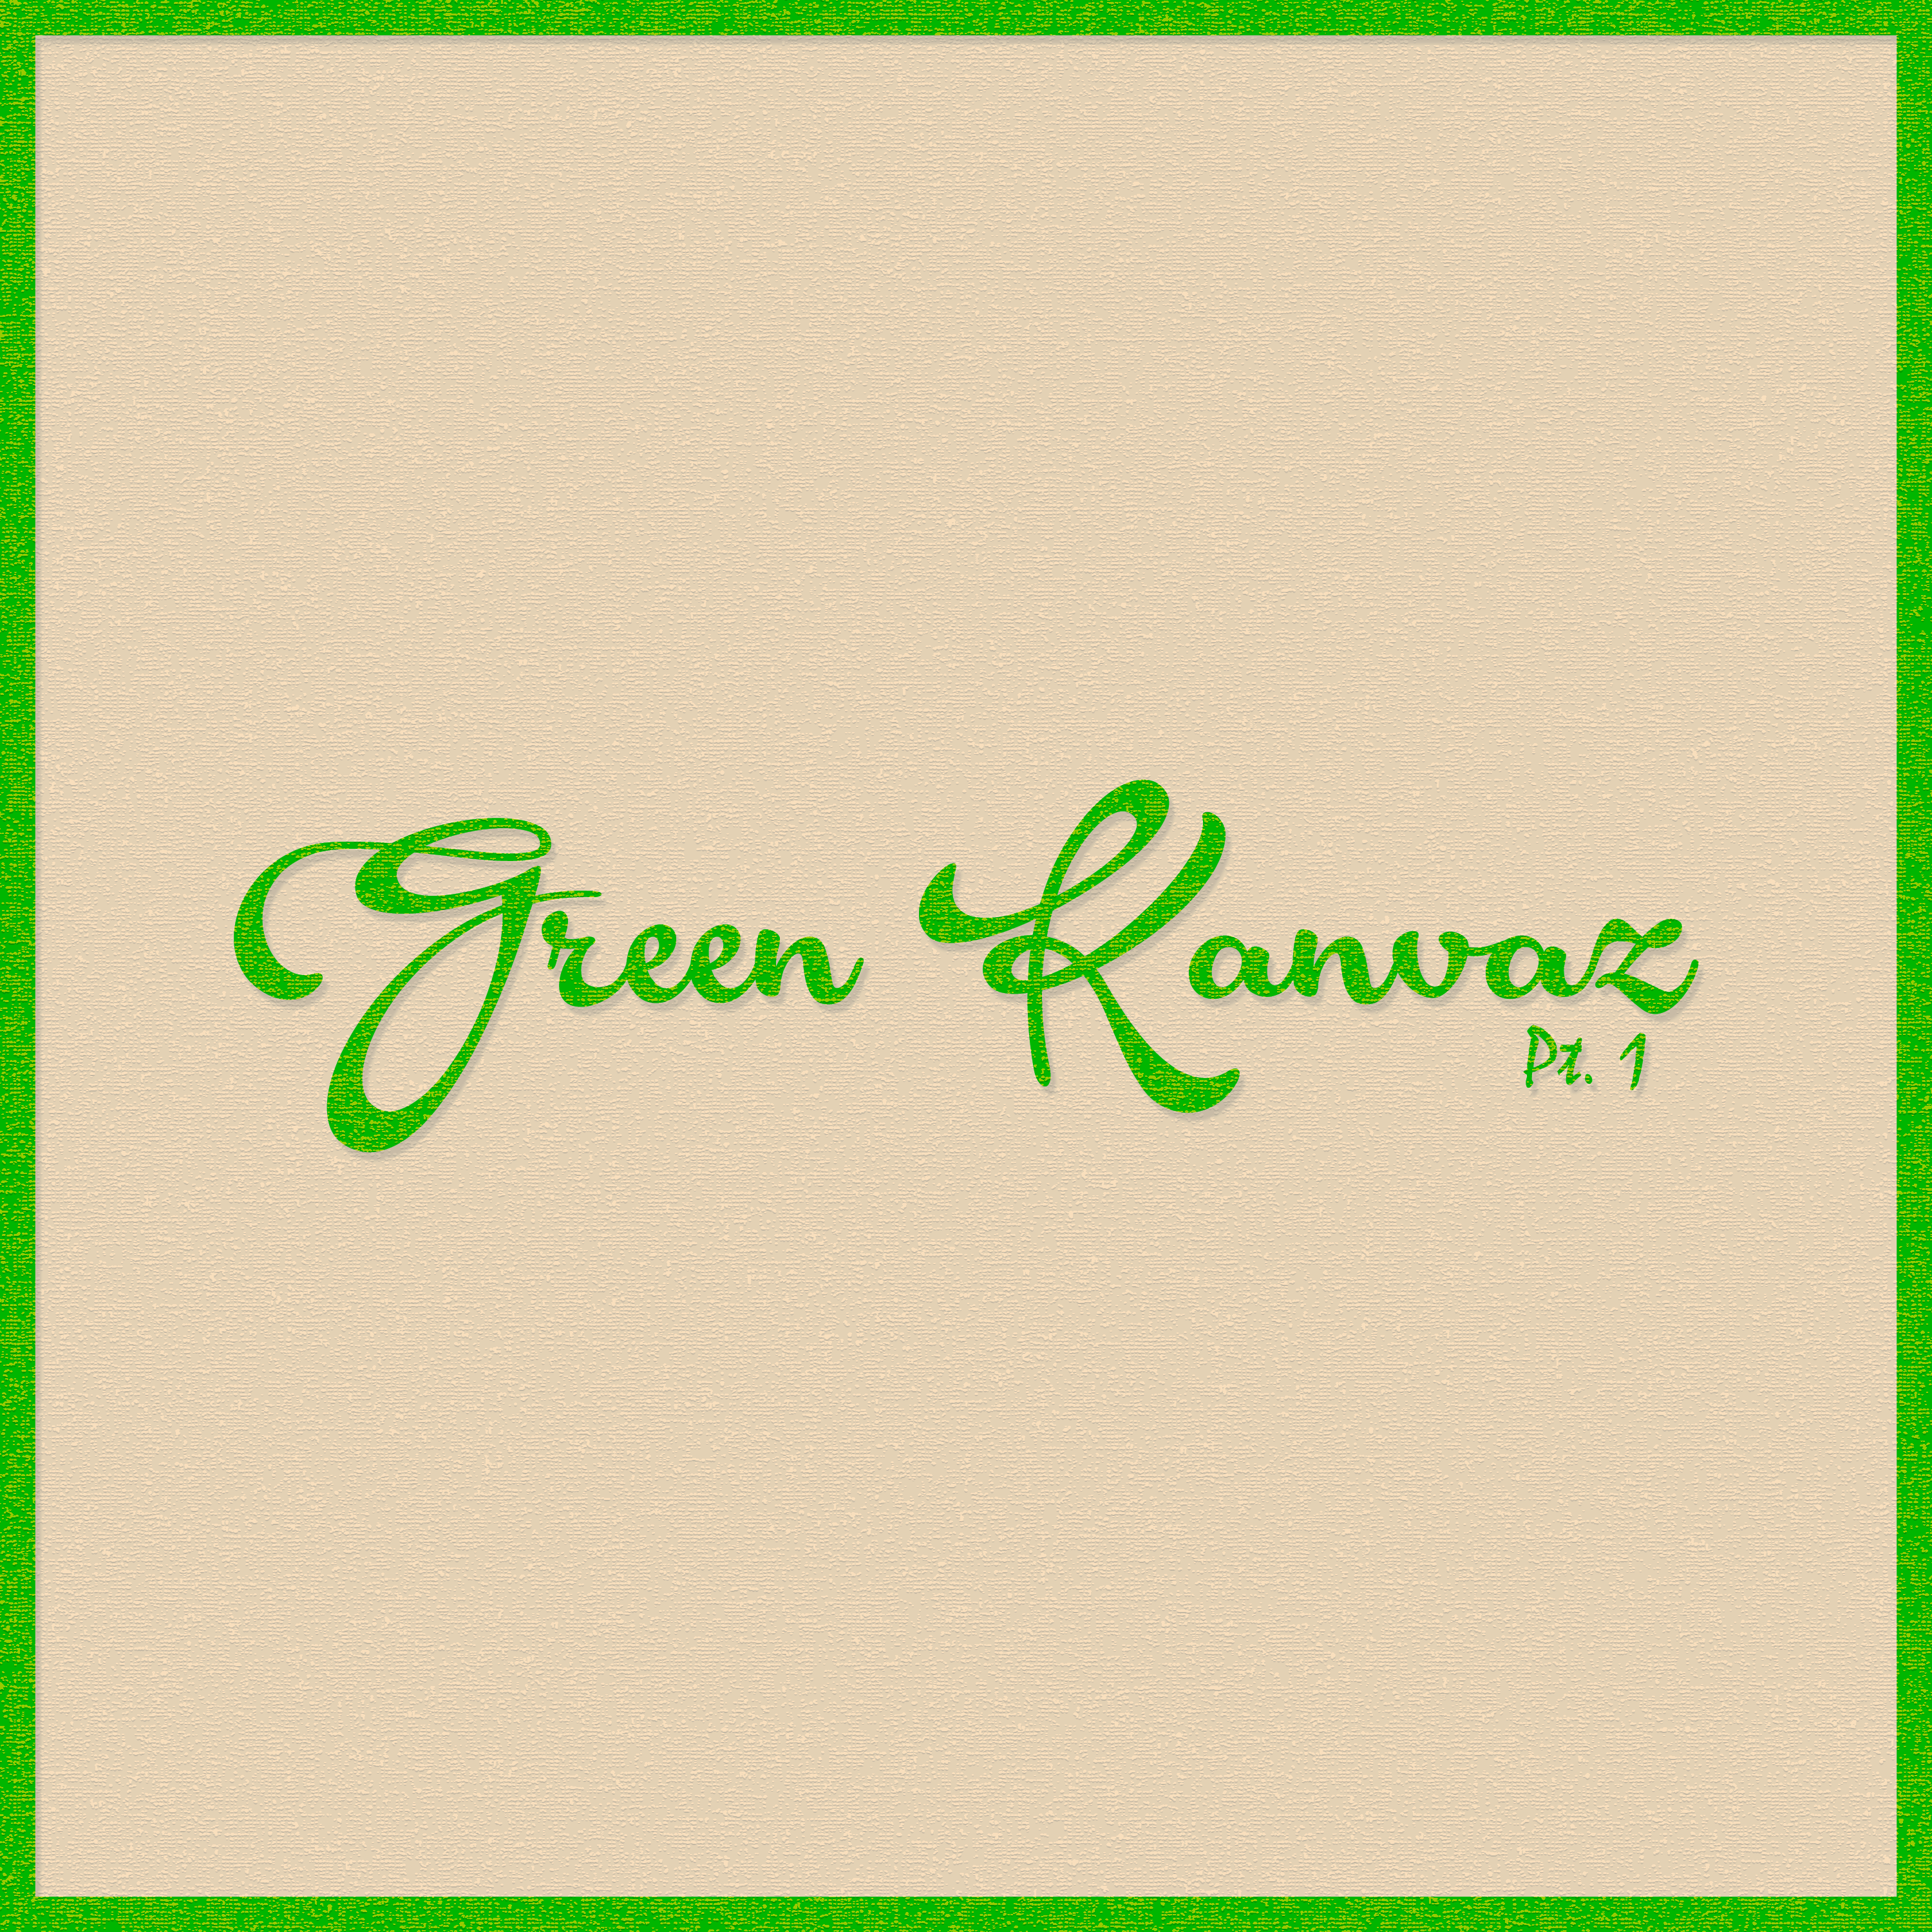 GreenKanvazAlbumCover